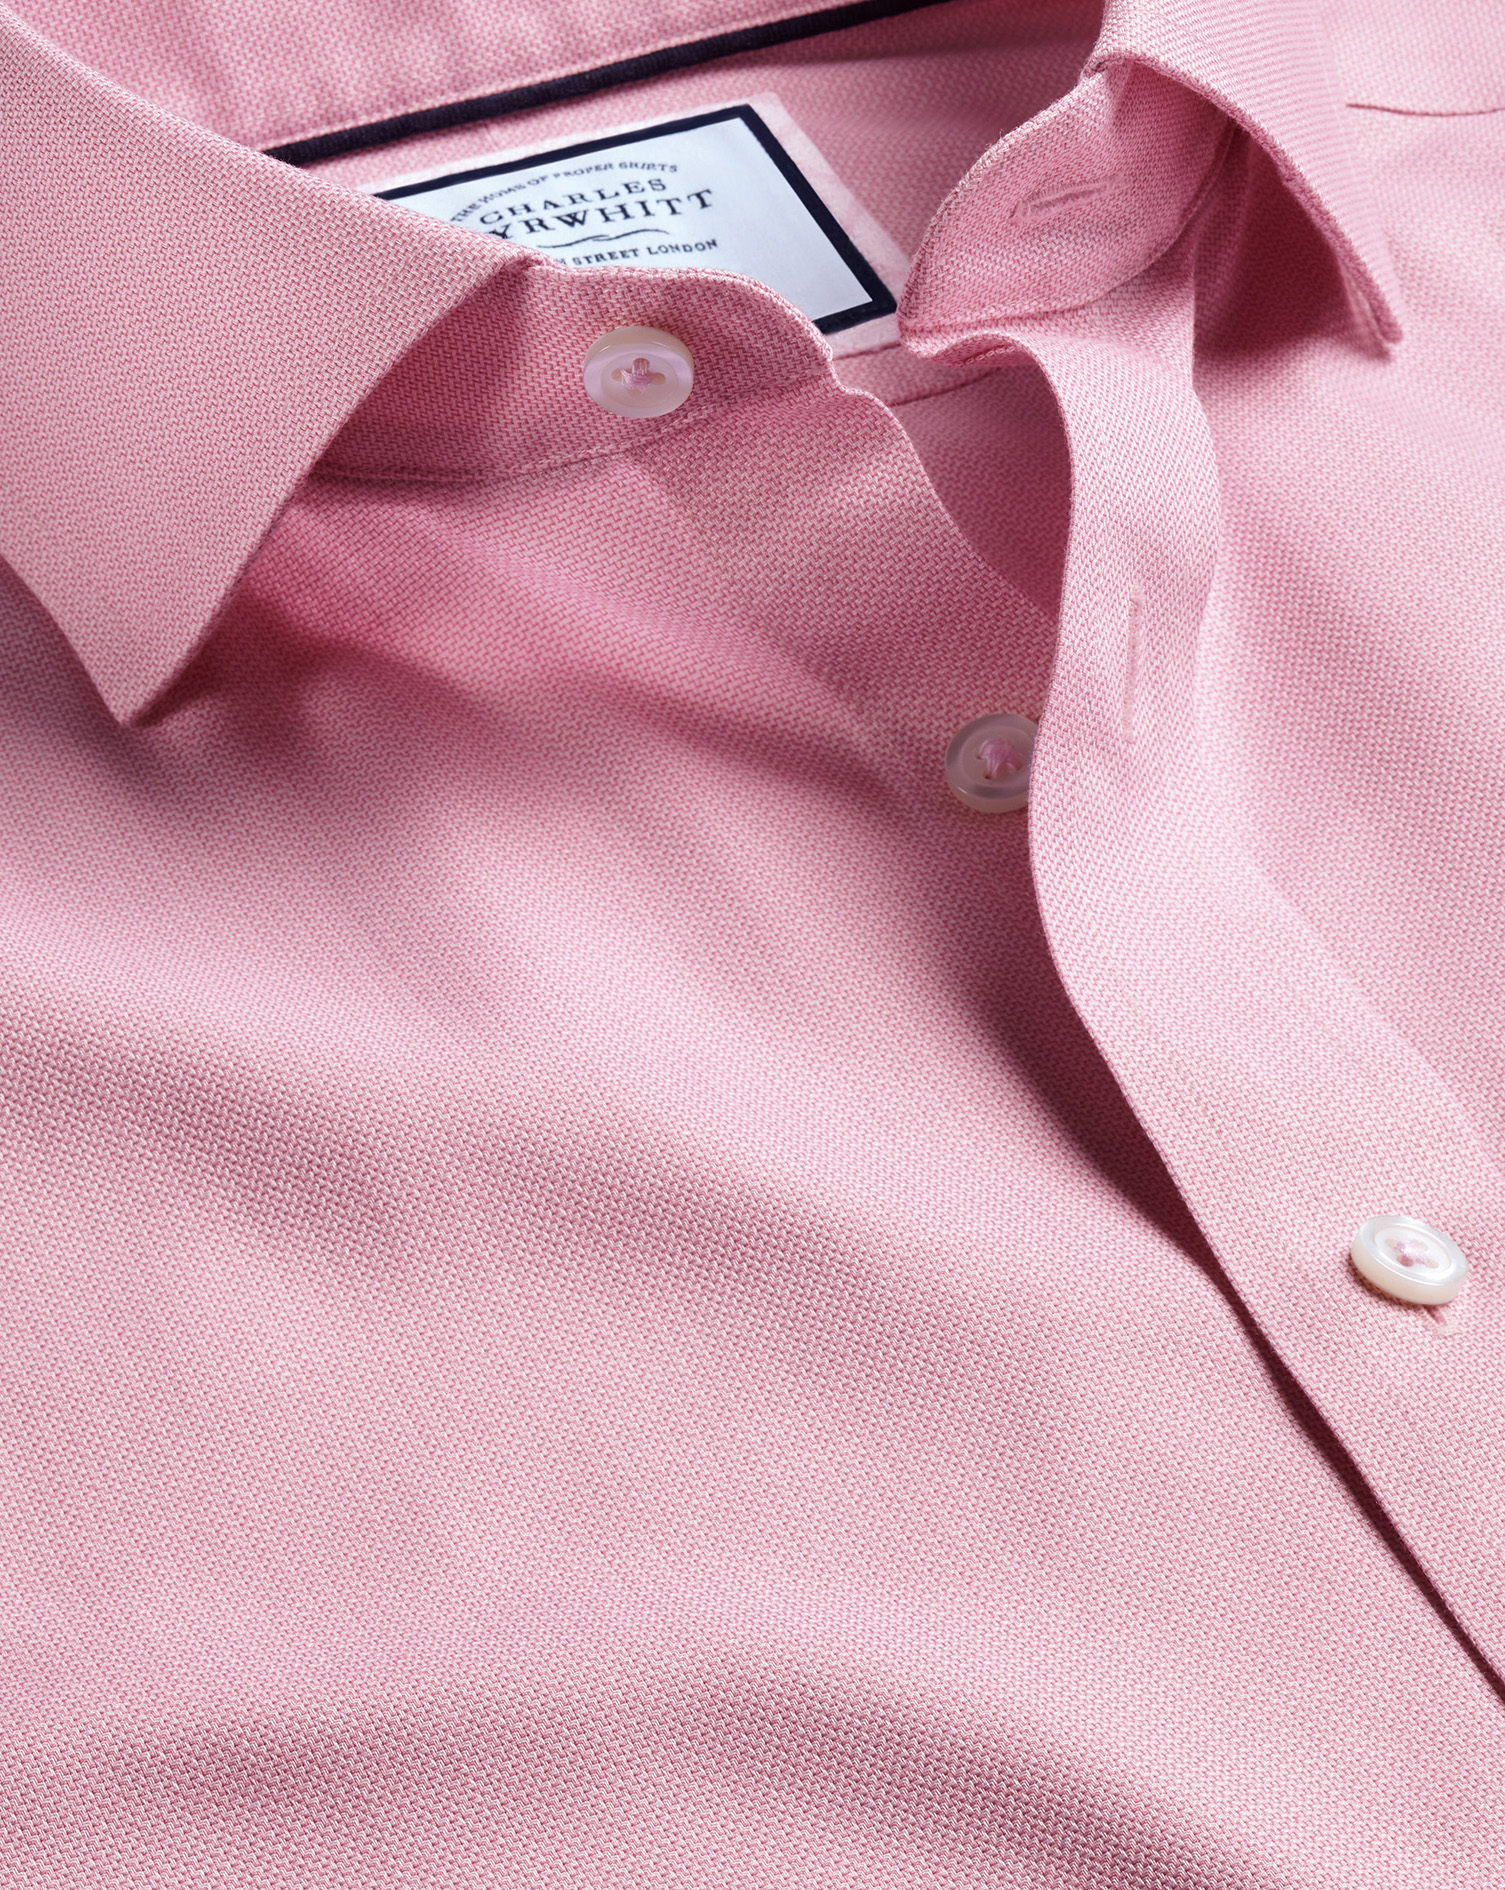 Men's Charles Tyrwhitt Cutaway Collar Non-Iron Henley Weave Dress Shirt - Pink French Cuff Size Medi